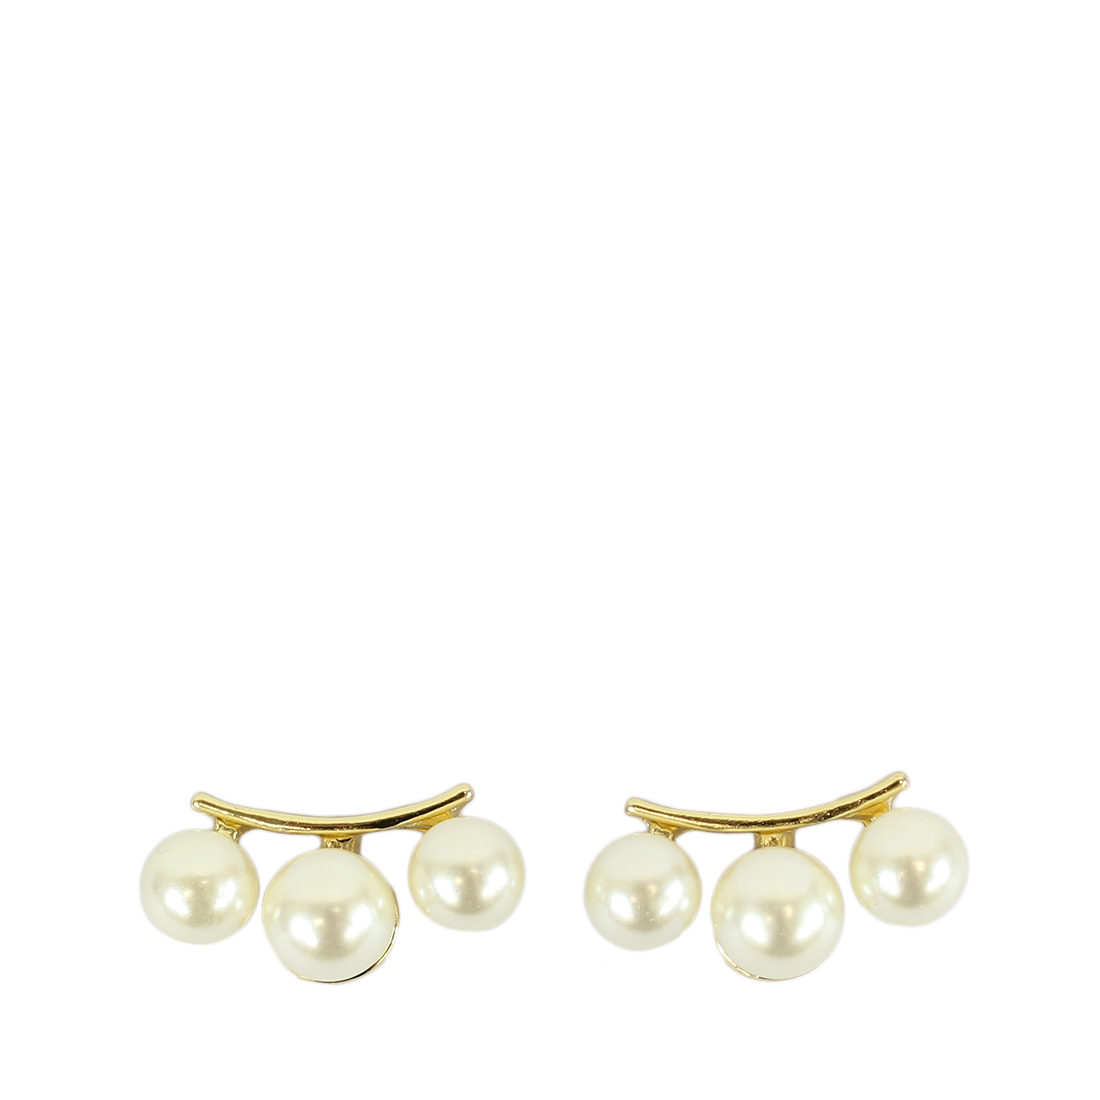 Small three pearls earrings